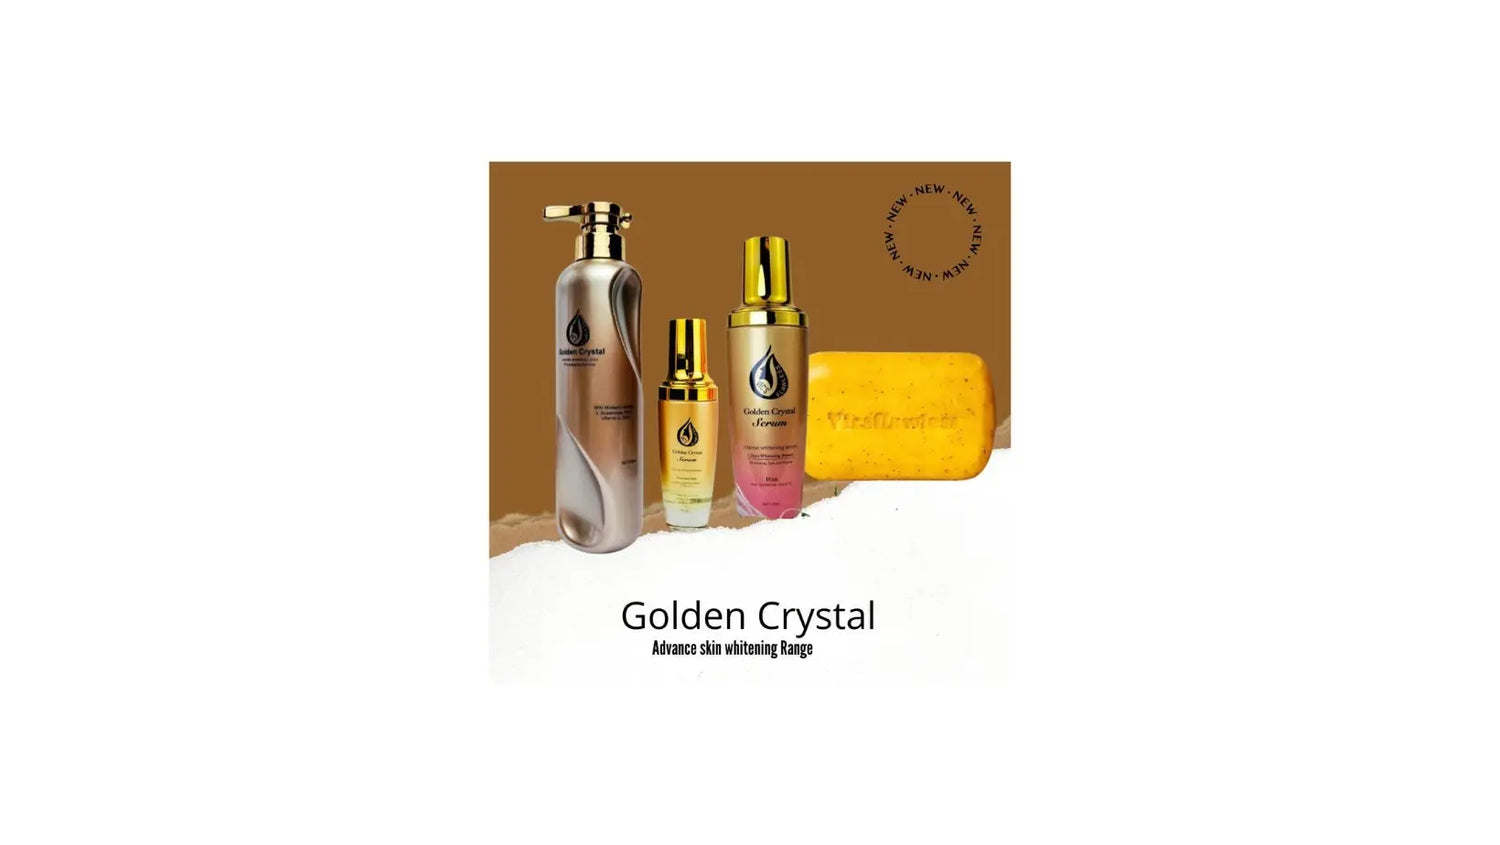 Golden Crystal Range - Vicsflawless